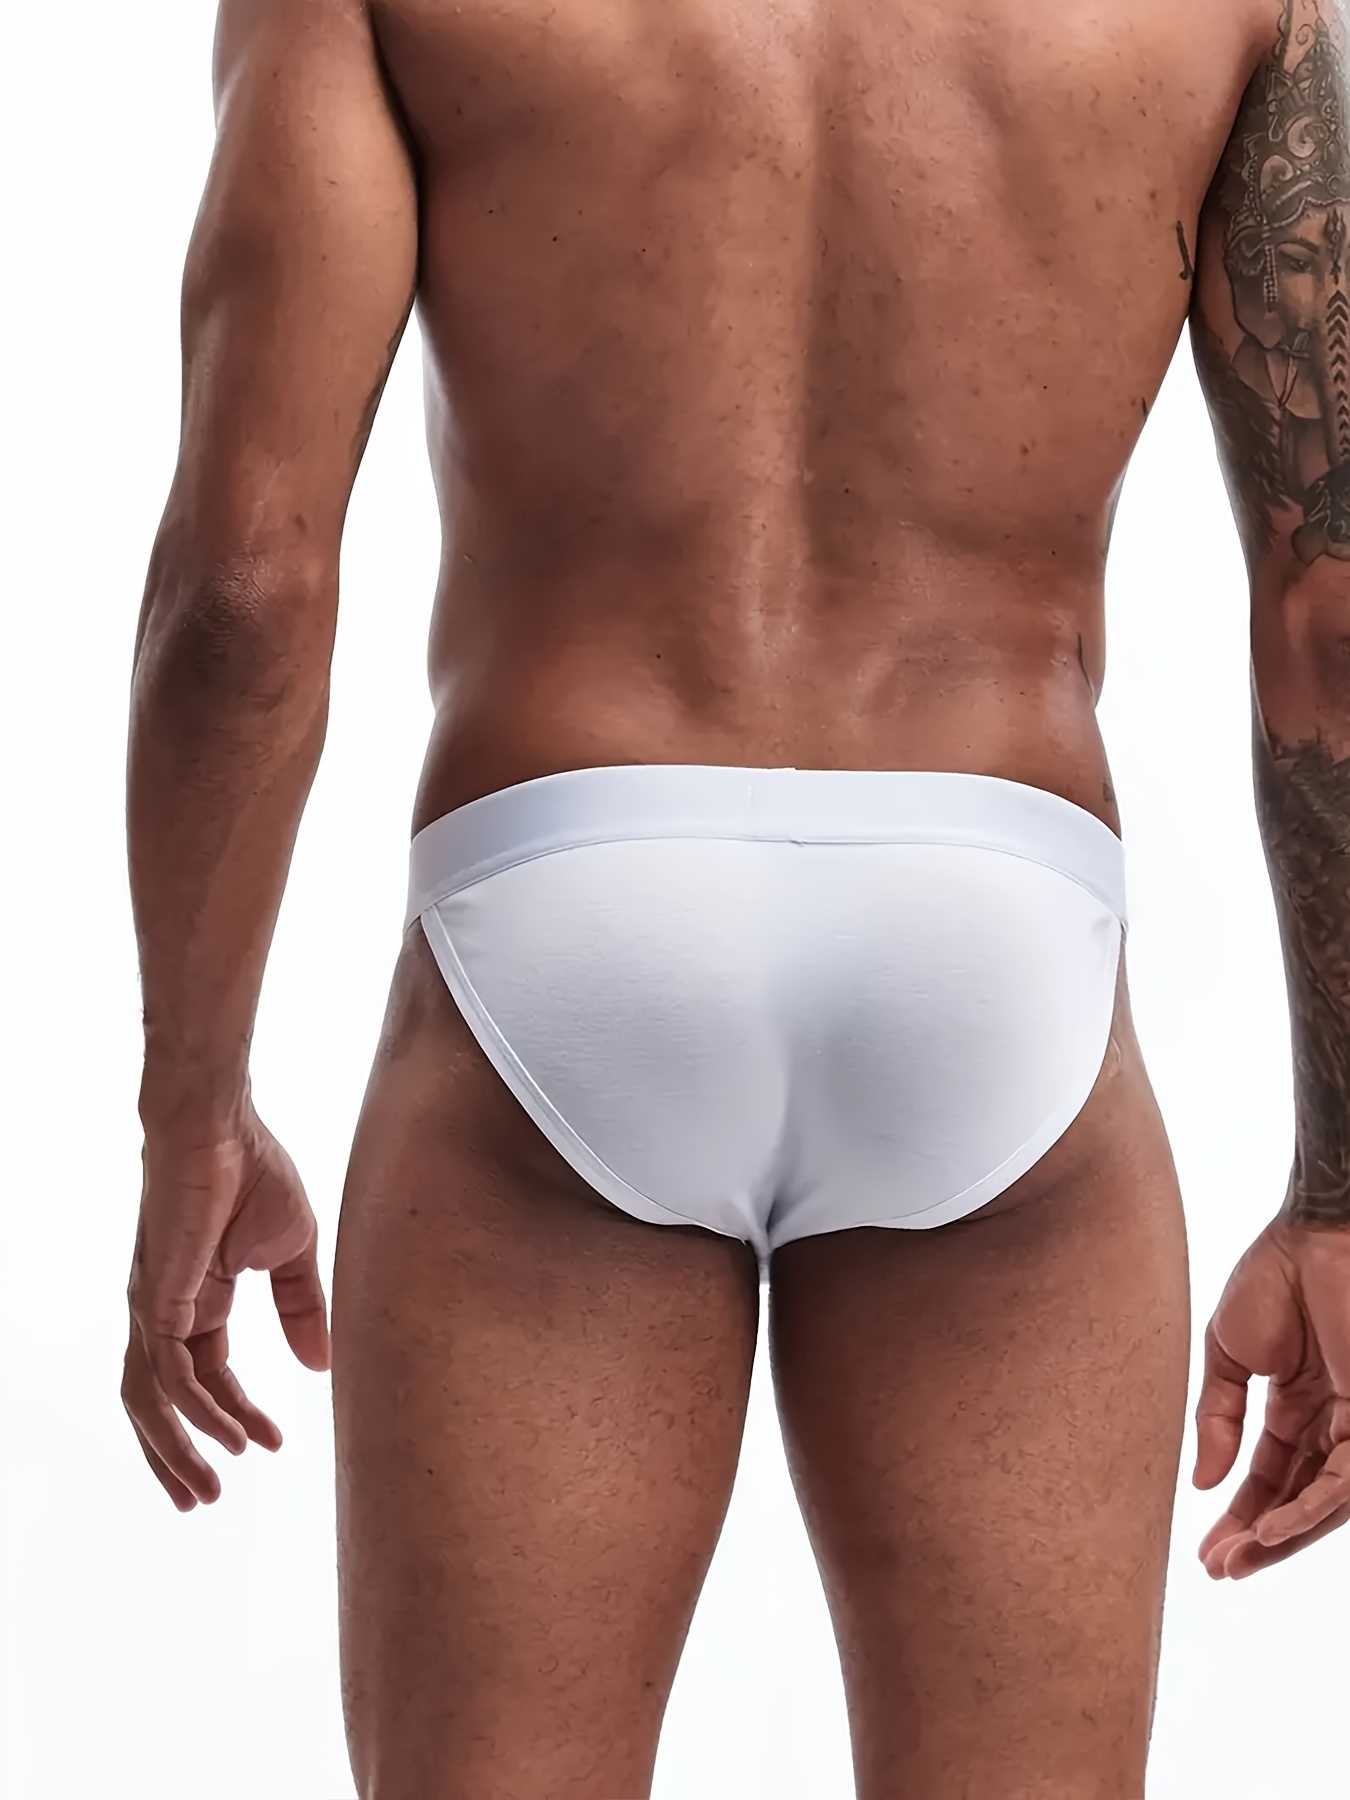 Buy Boys Sexy Underwear Low Waist Briefs Stretchable Underpants